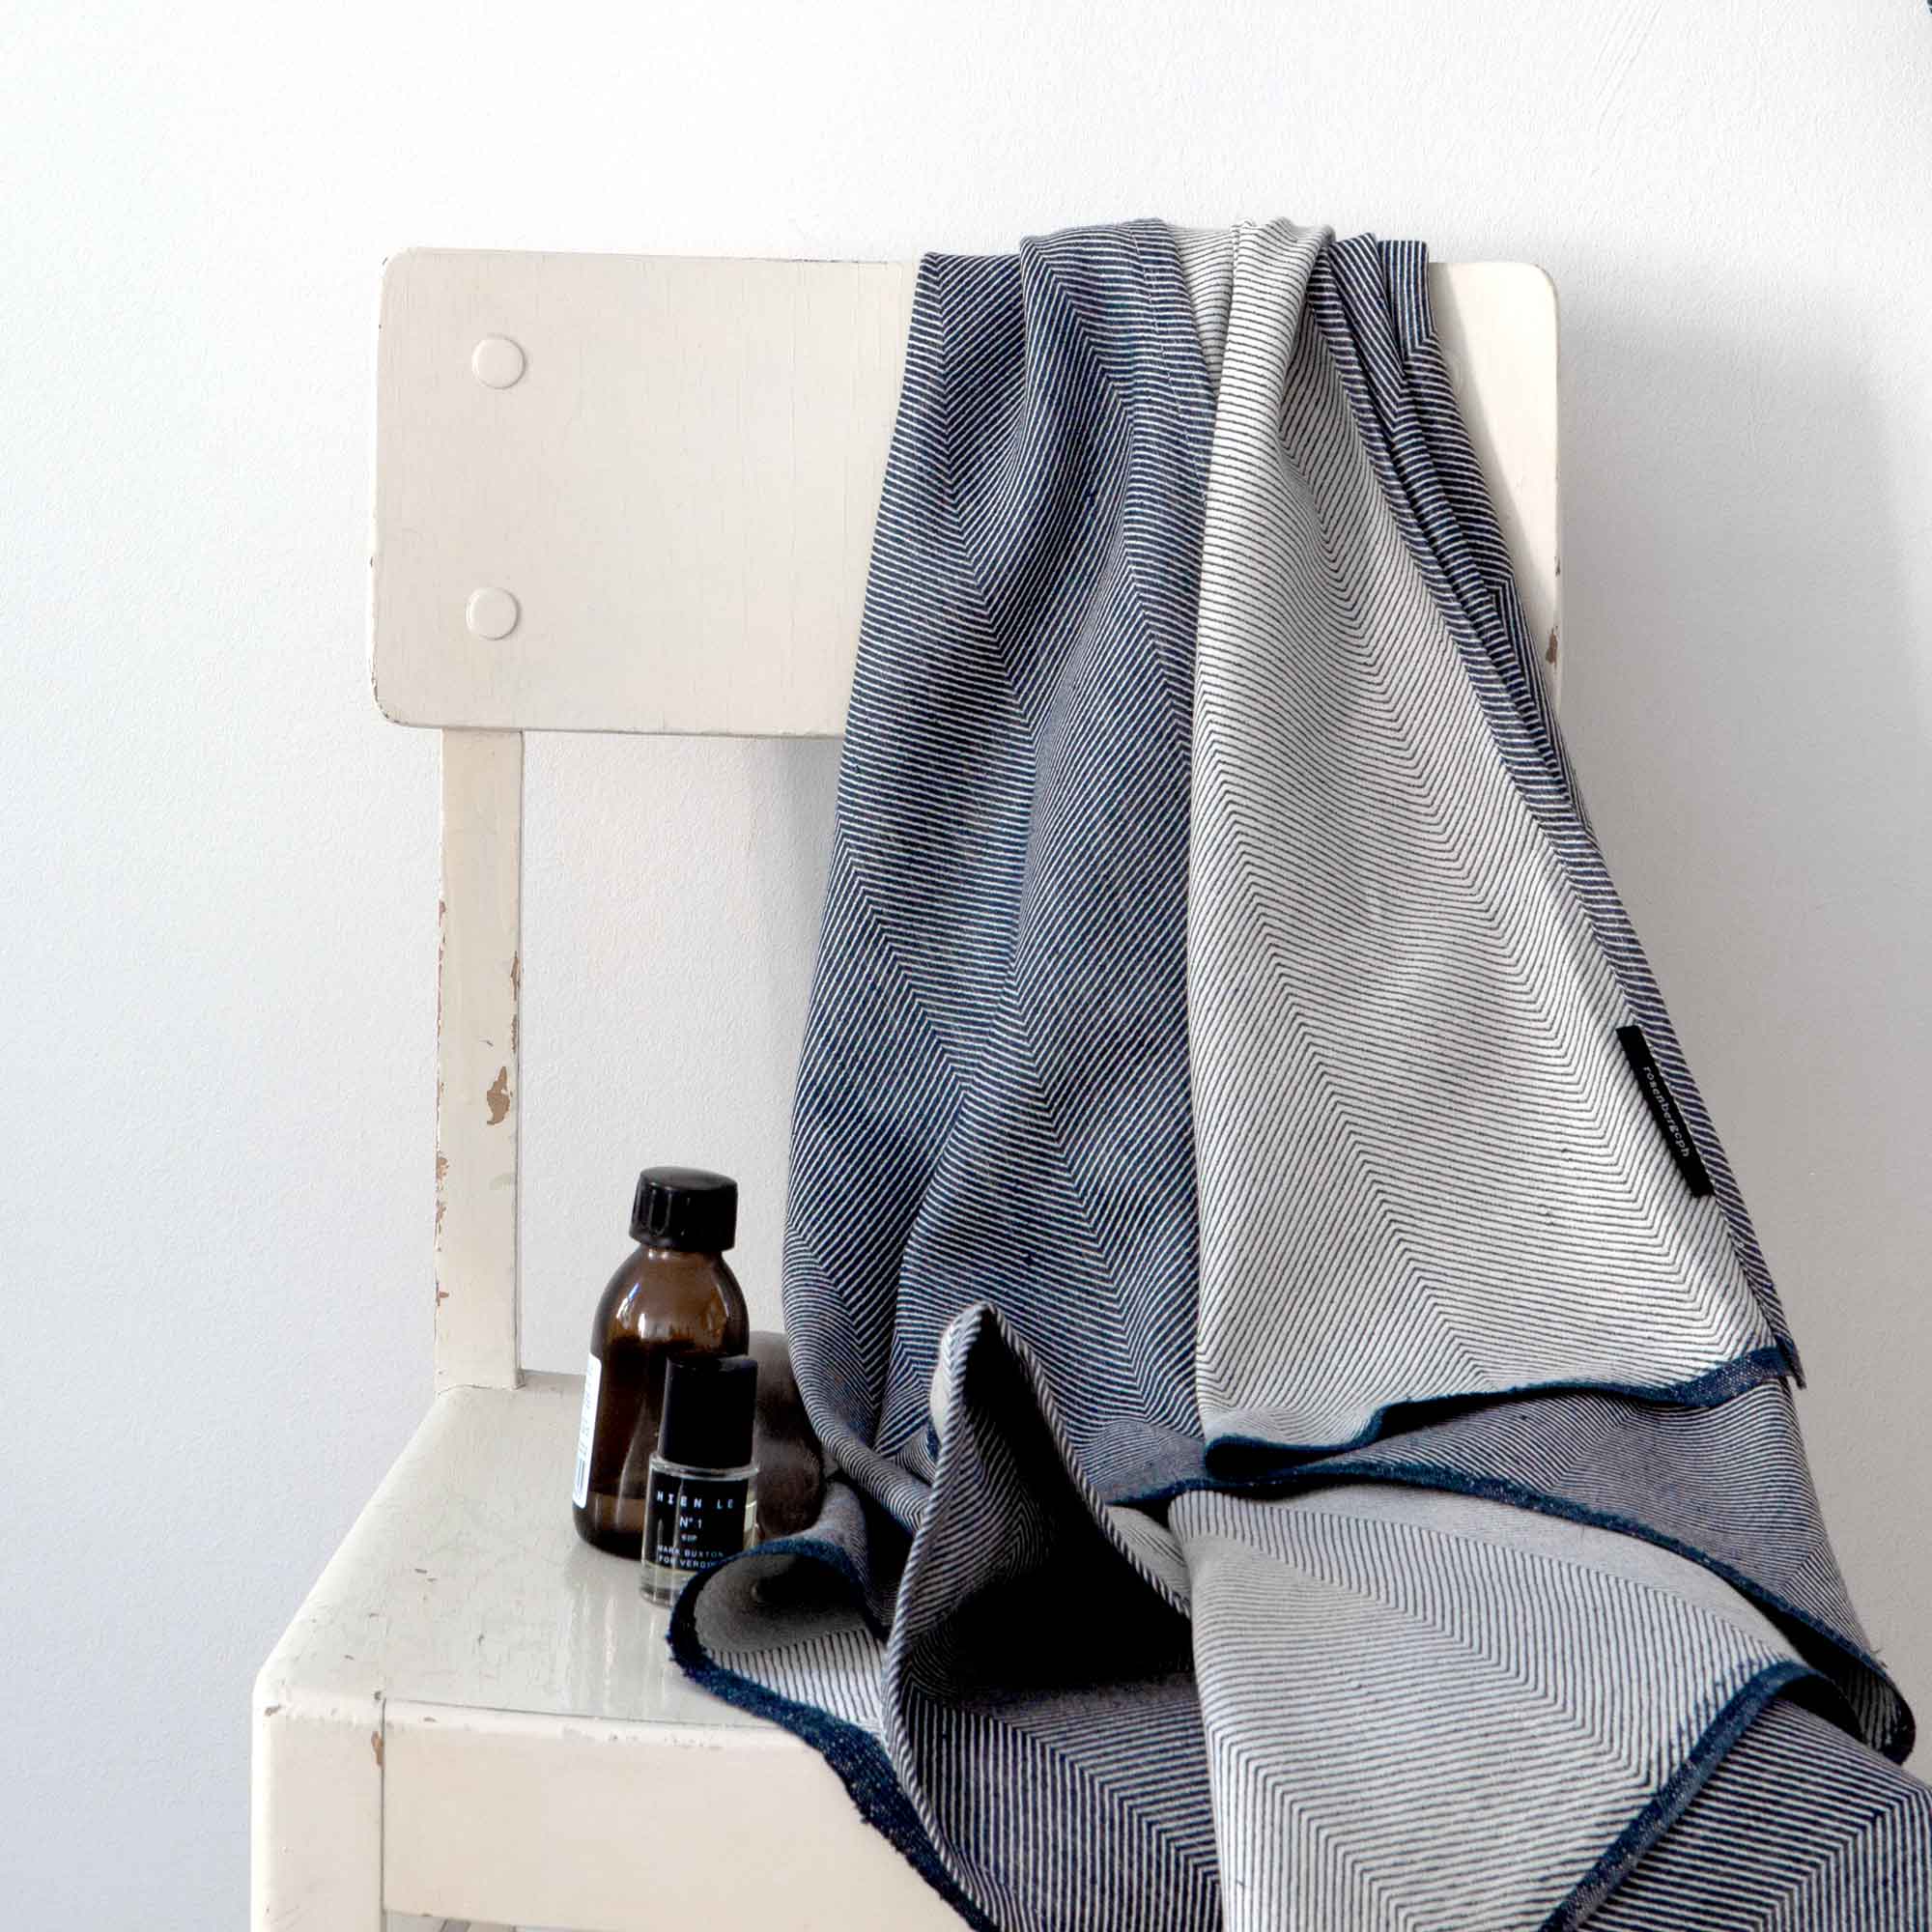 Bath towel, Indigo, linen/cotton, design by Anne Rosenberg, RosenbergCph